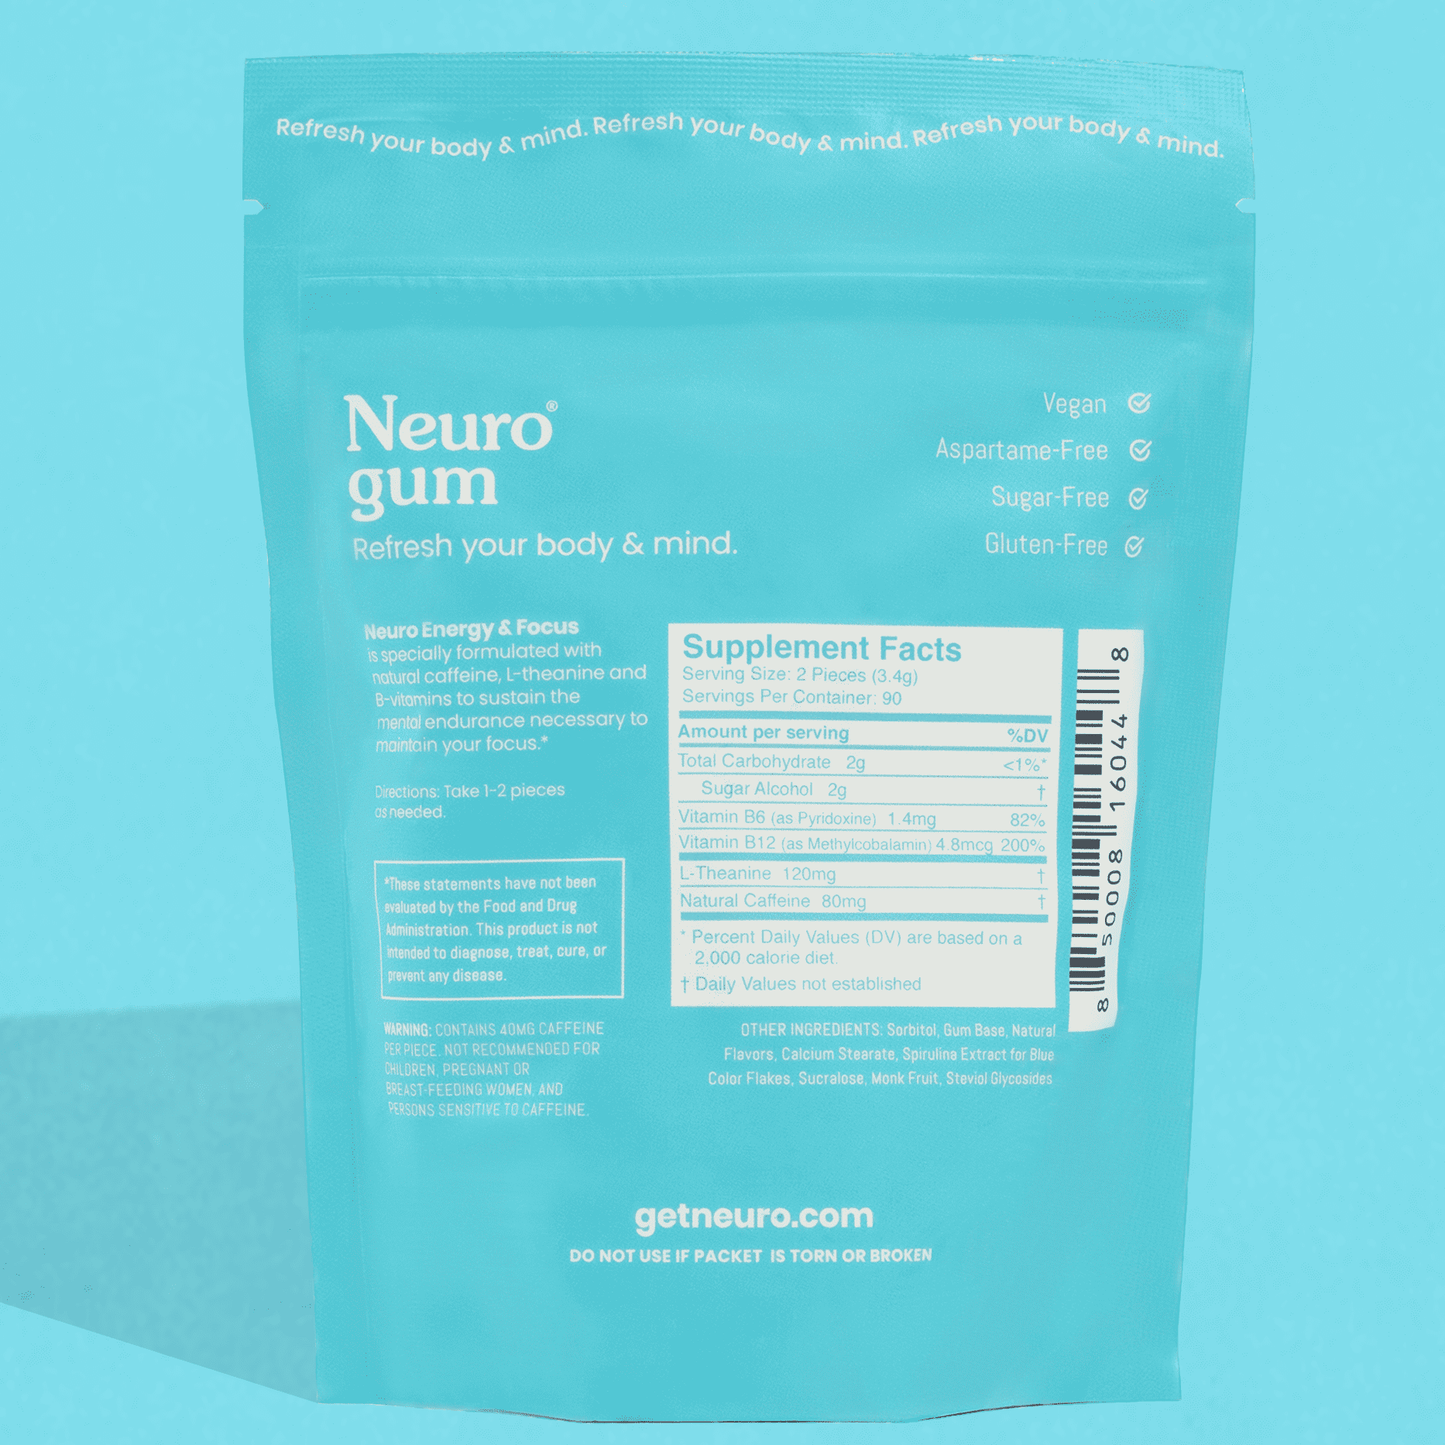 Energy & Focus Gum by Neuro